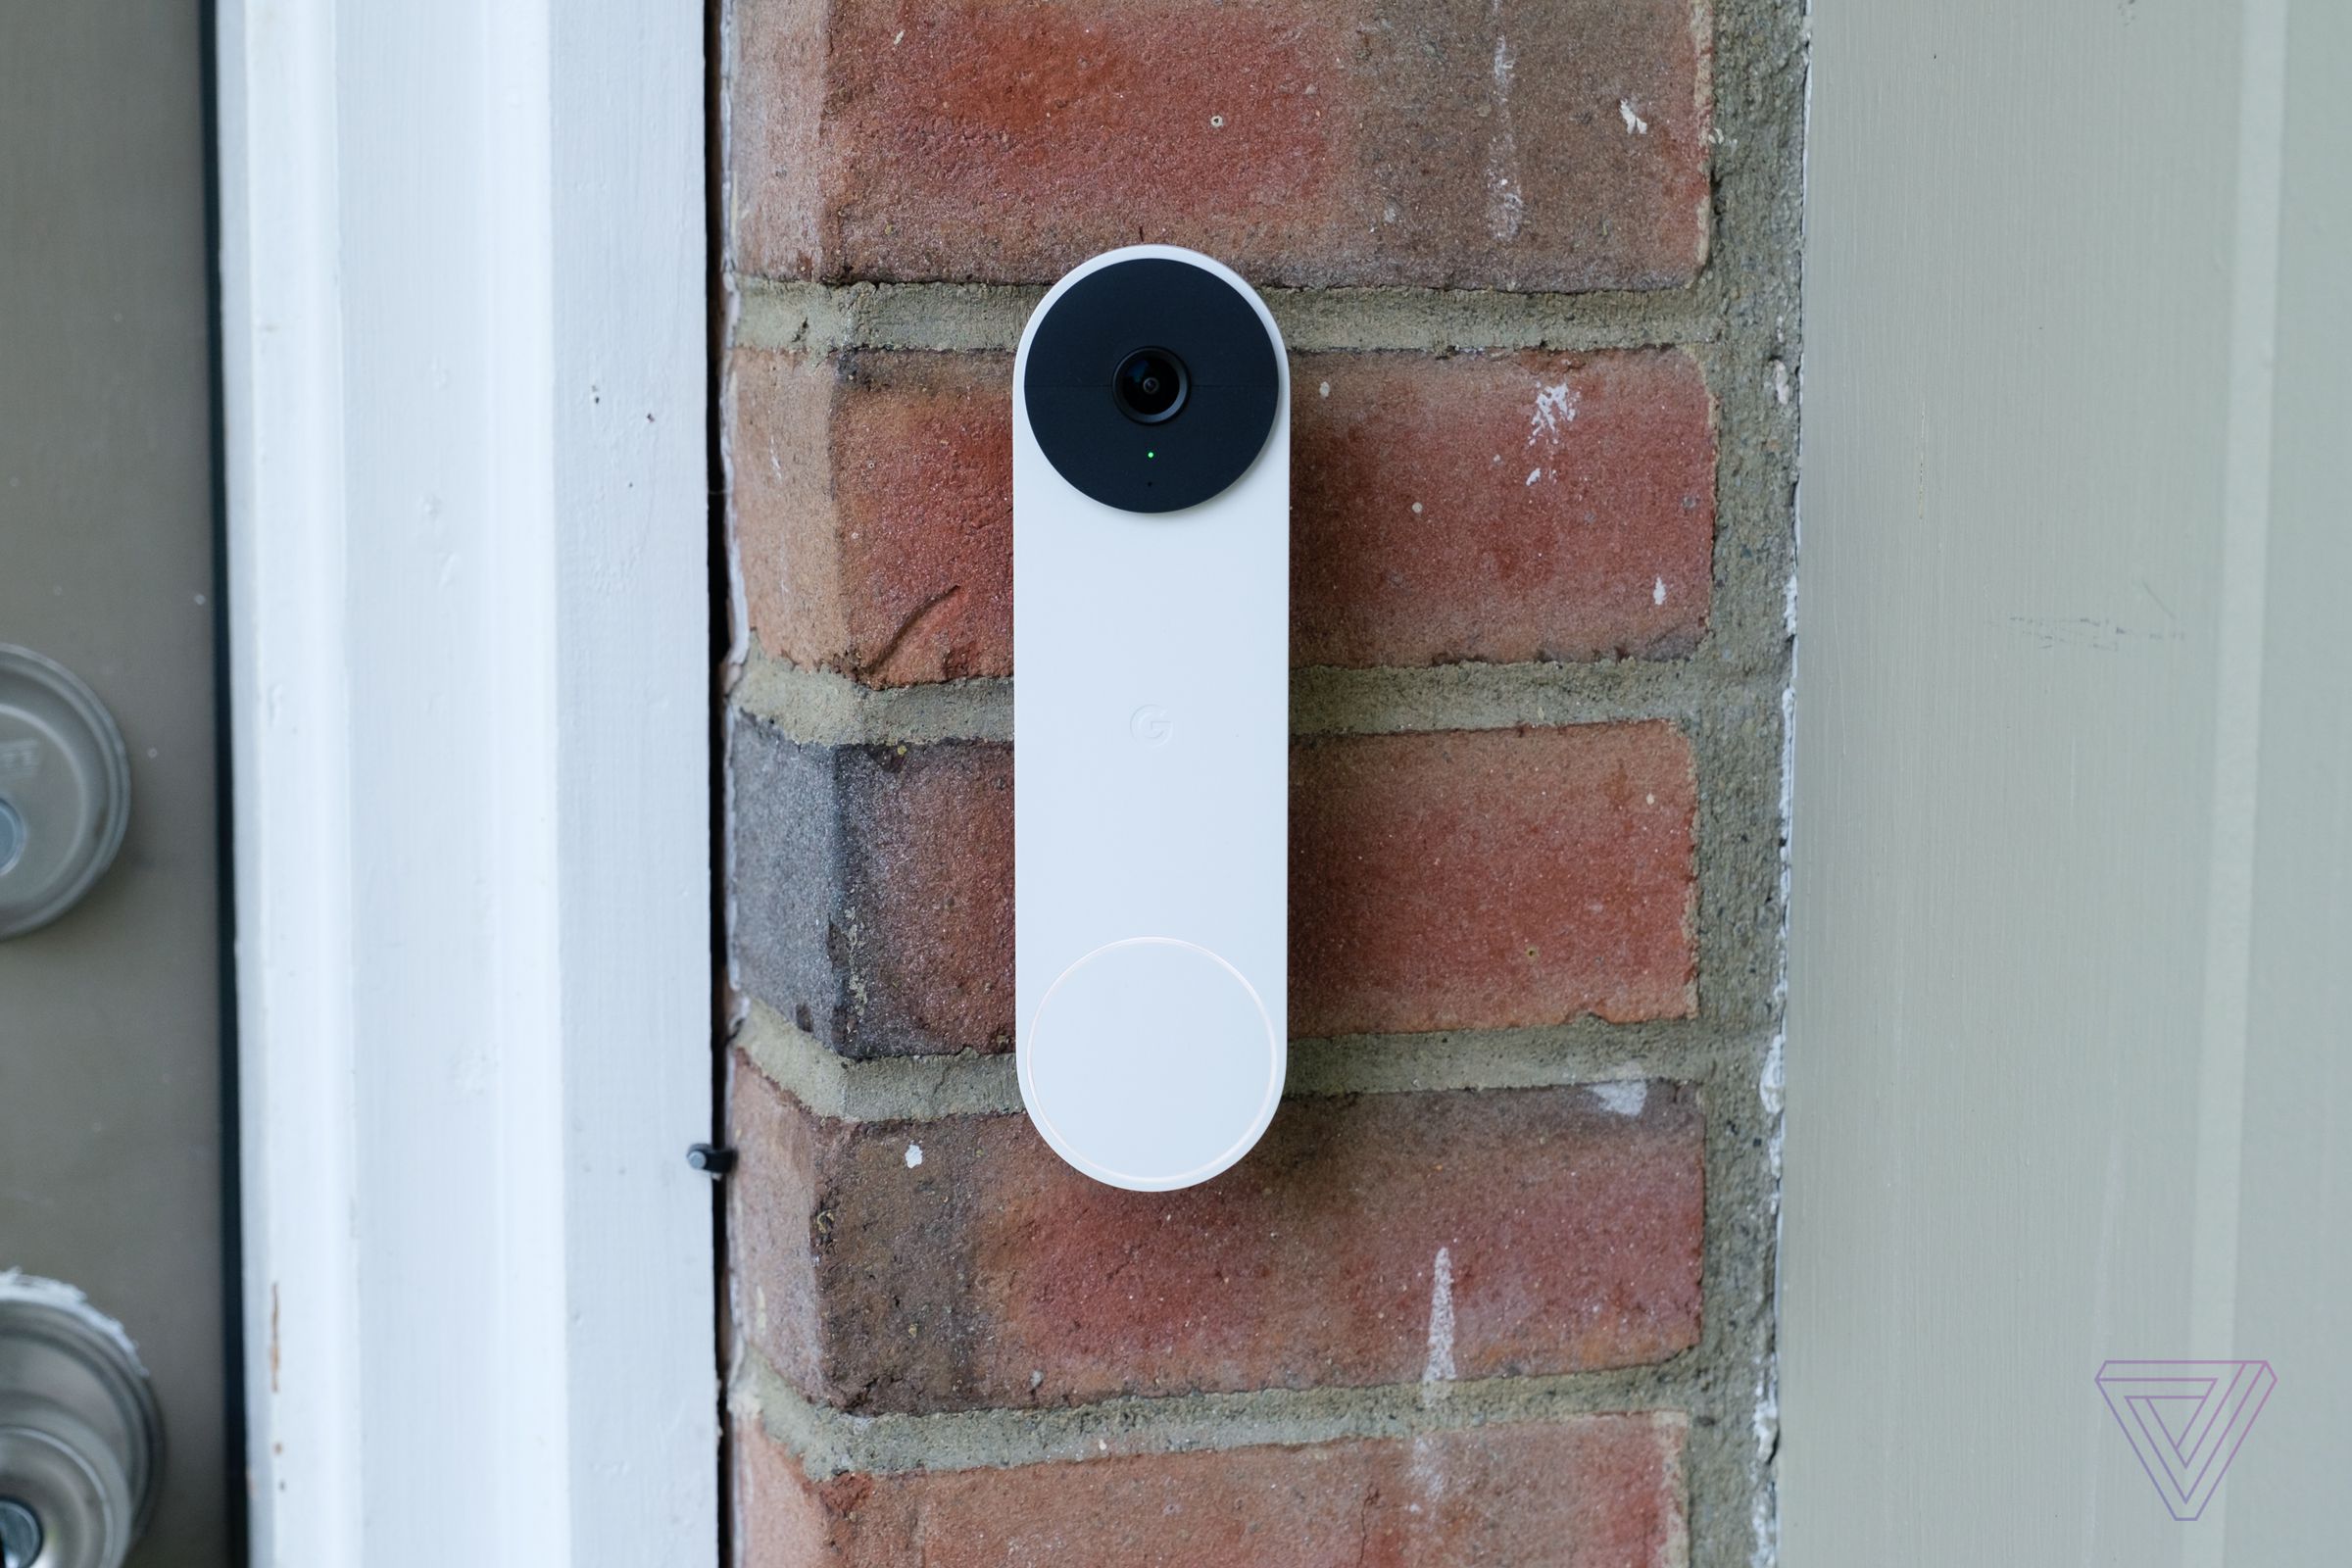 The new battery-powered Nest Doorbell